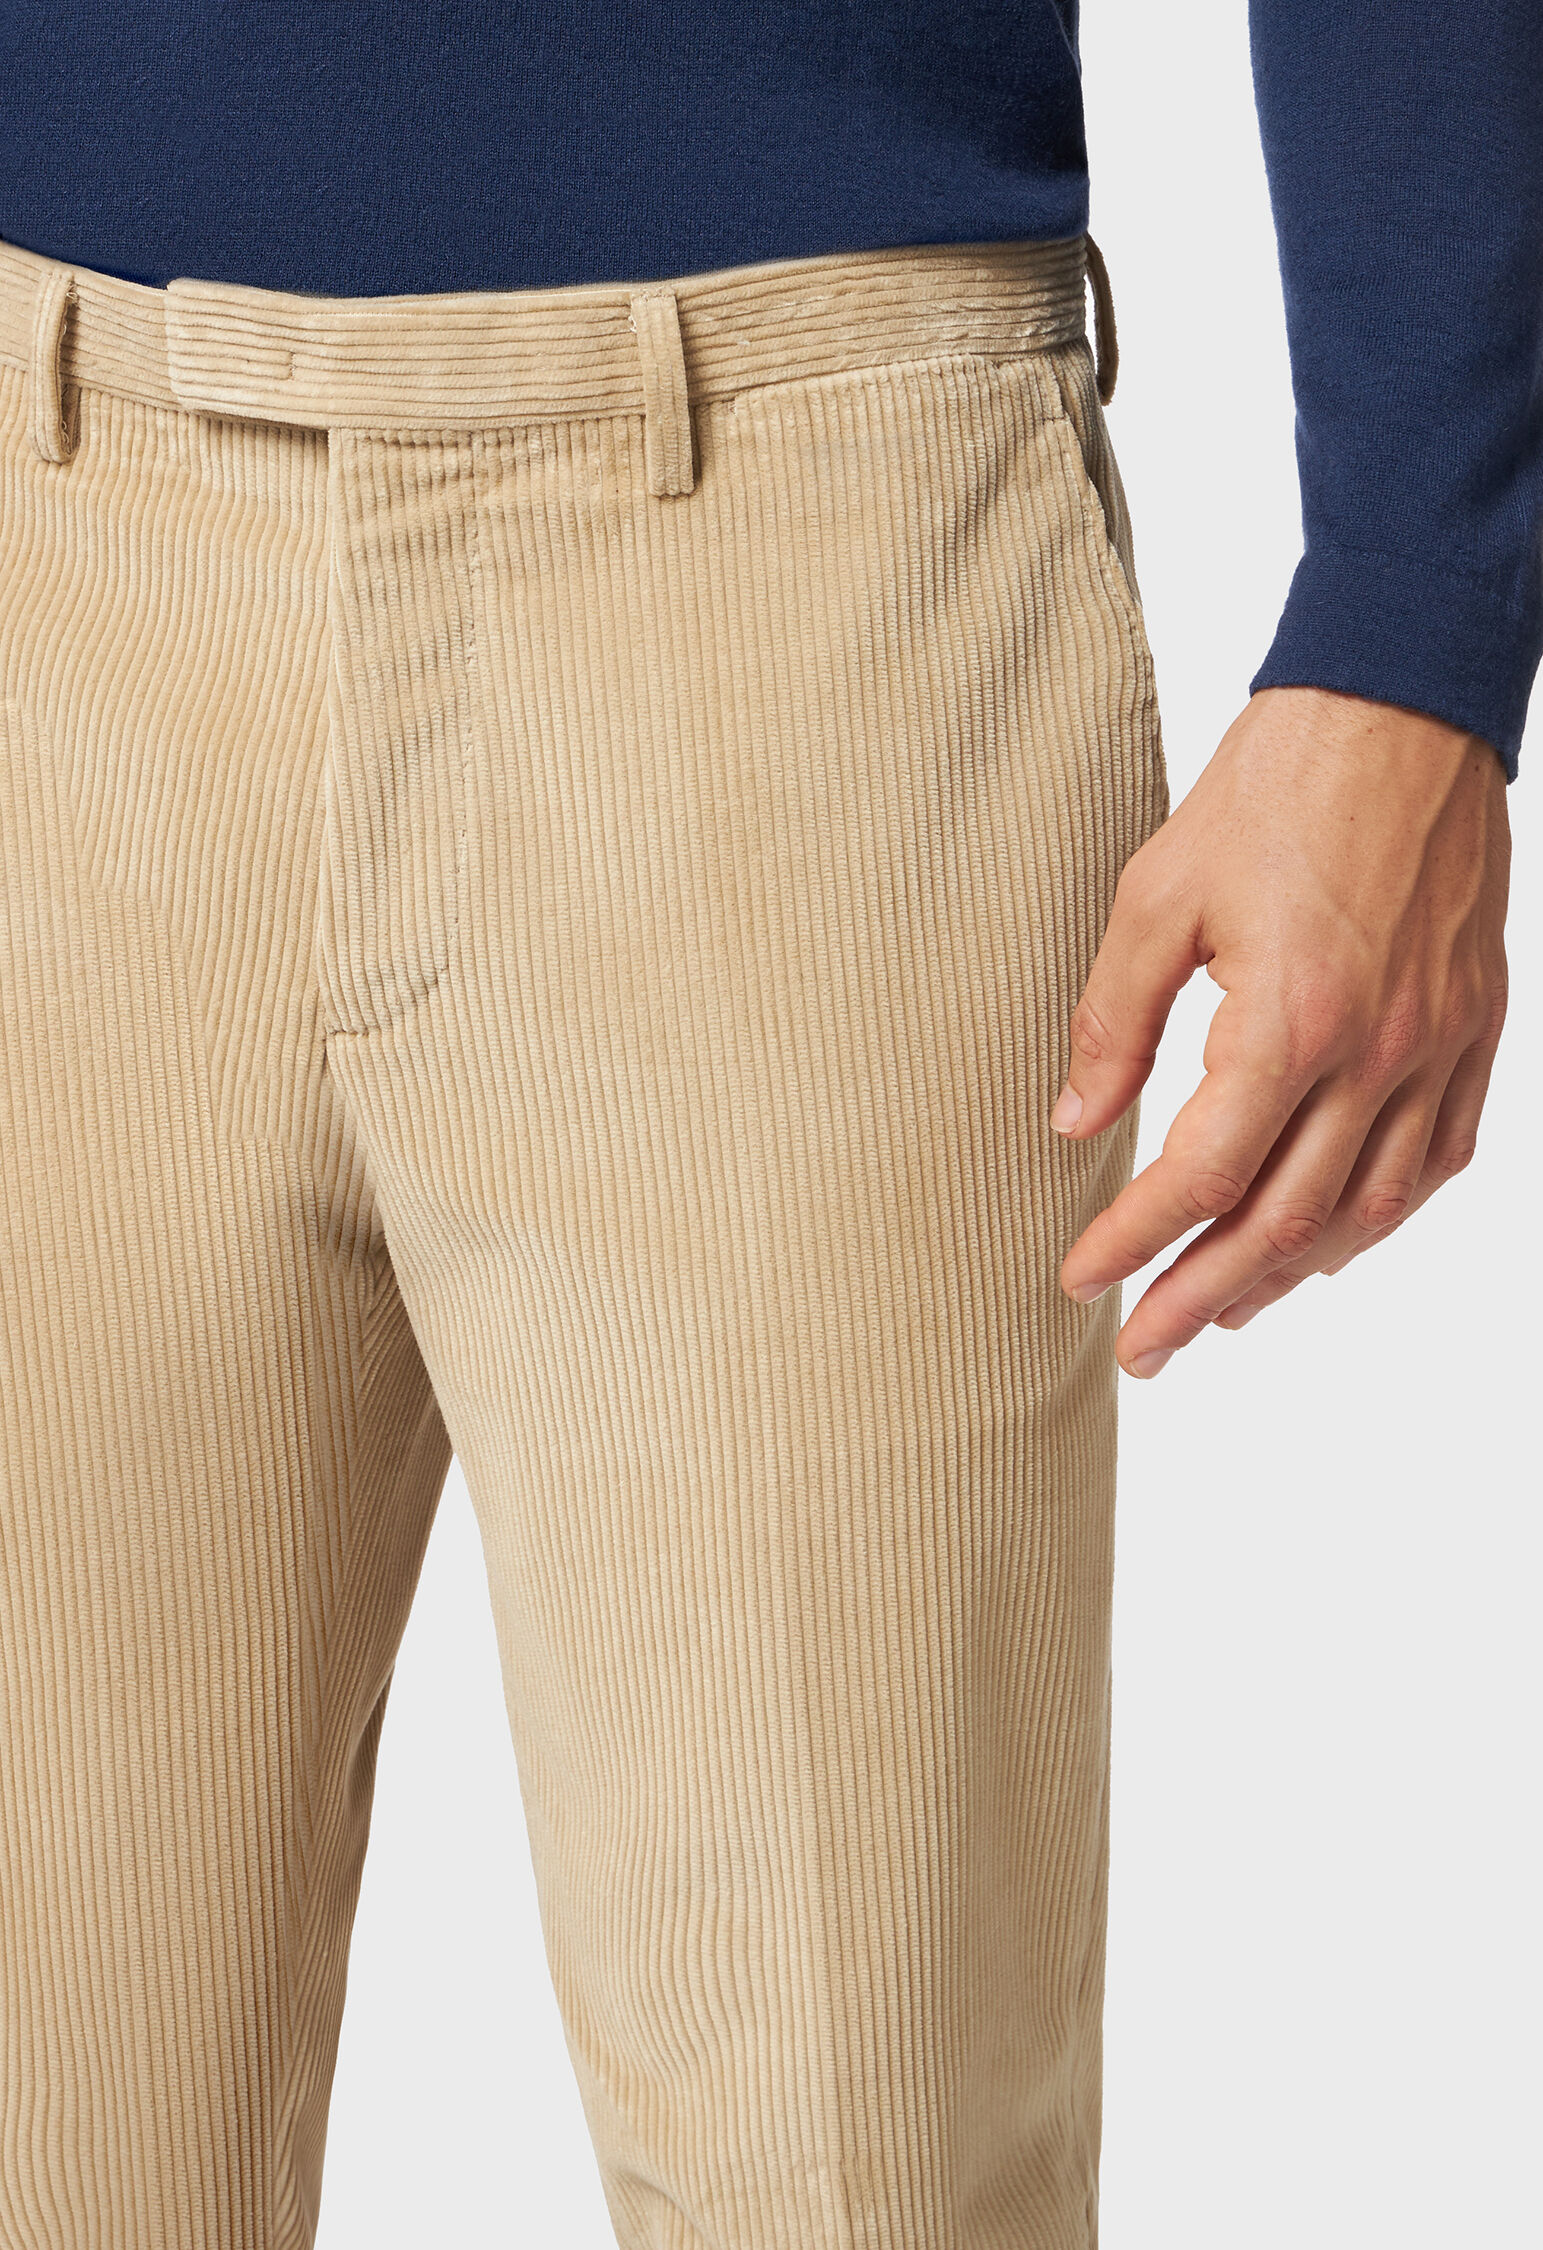 Retro Corduroy Trousers Revival 1940s 1950s Vintage Style Authentic Edwin  Trousers Chestnut Brown - Etsy